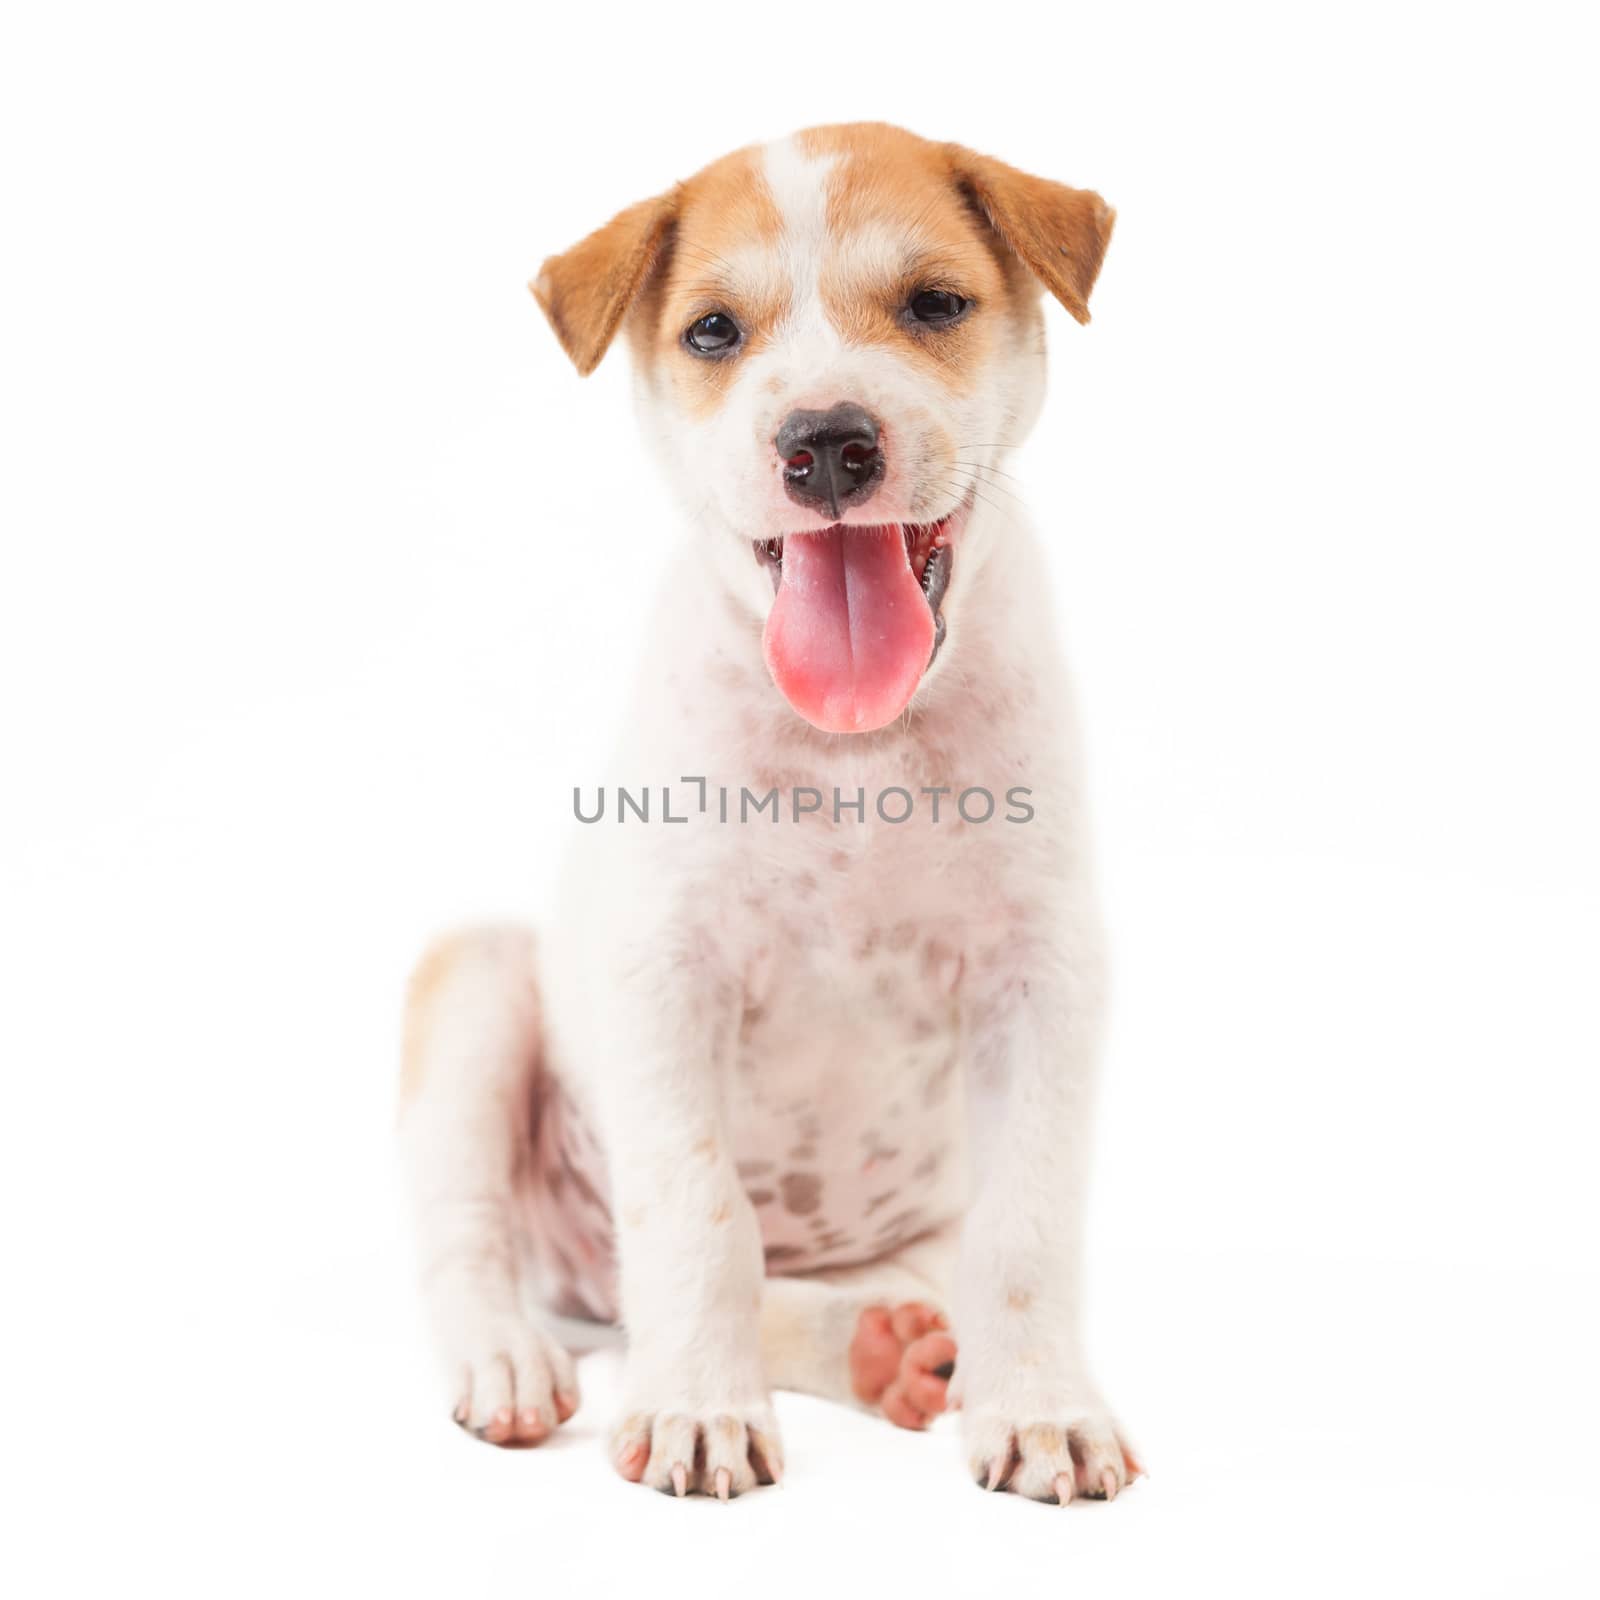 Puppy Dog showing tongue isolated on white background